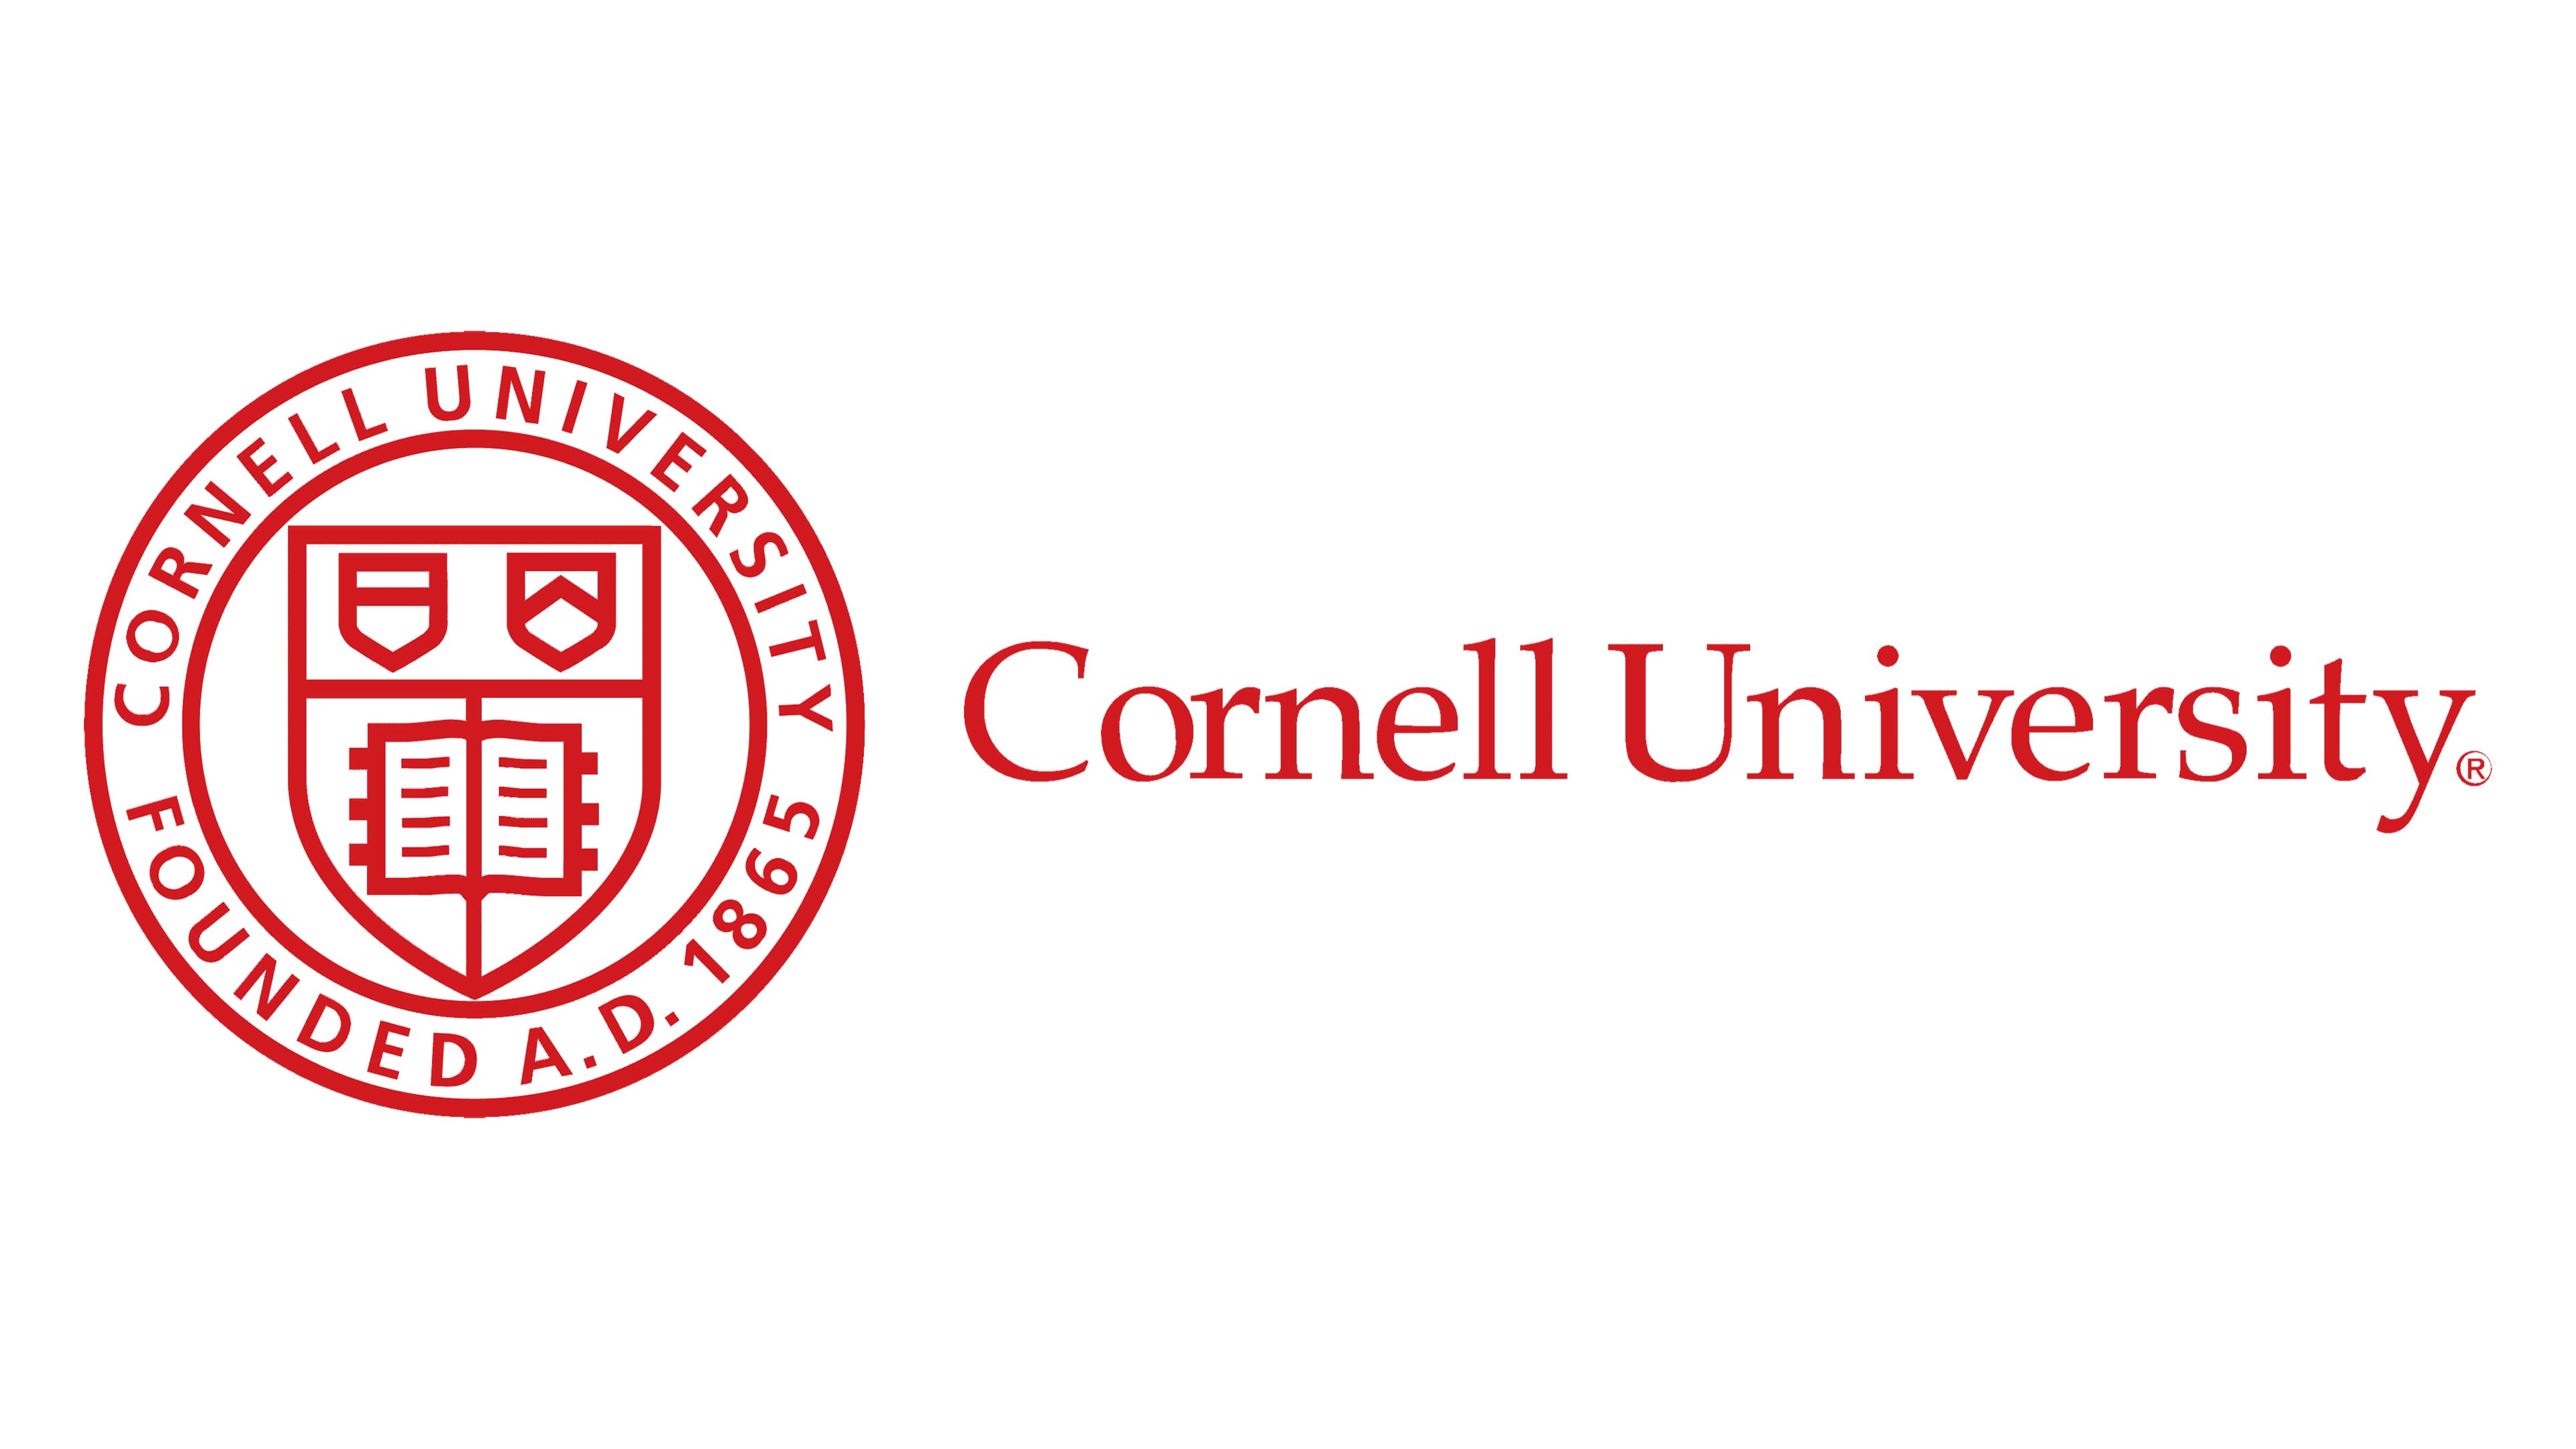 Mau_thiet_ke_ve_giao_duc_Cornell_University